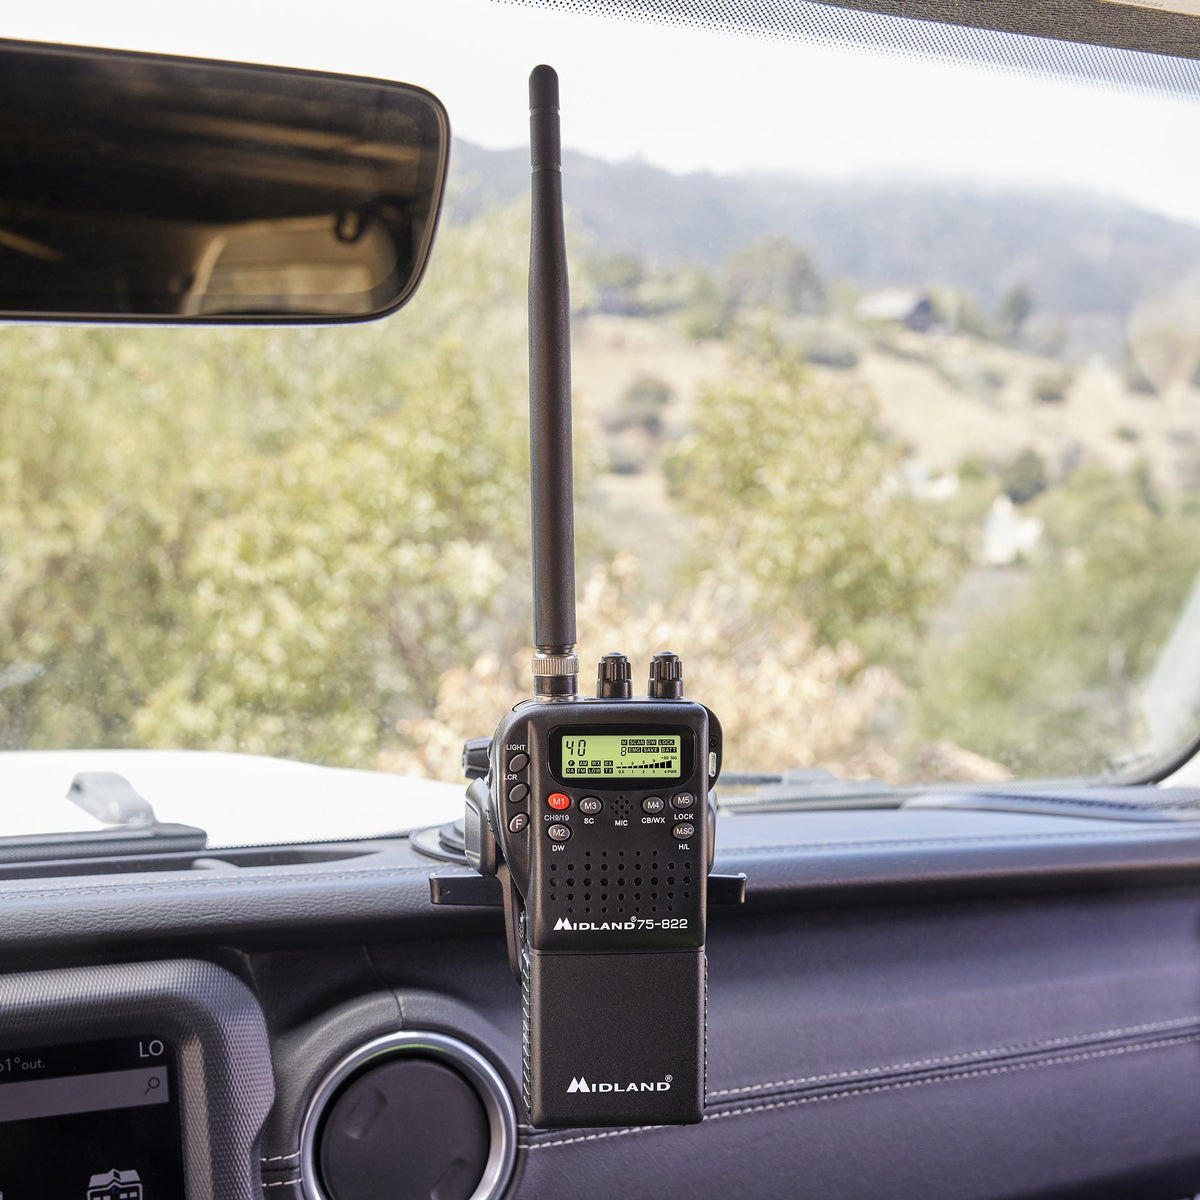 Handheld, 26 to 27 MHz, Mobile CB Radio - 23M607